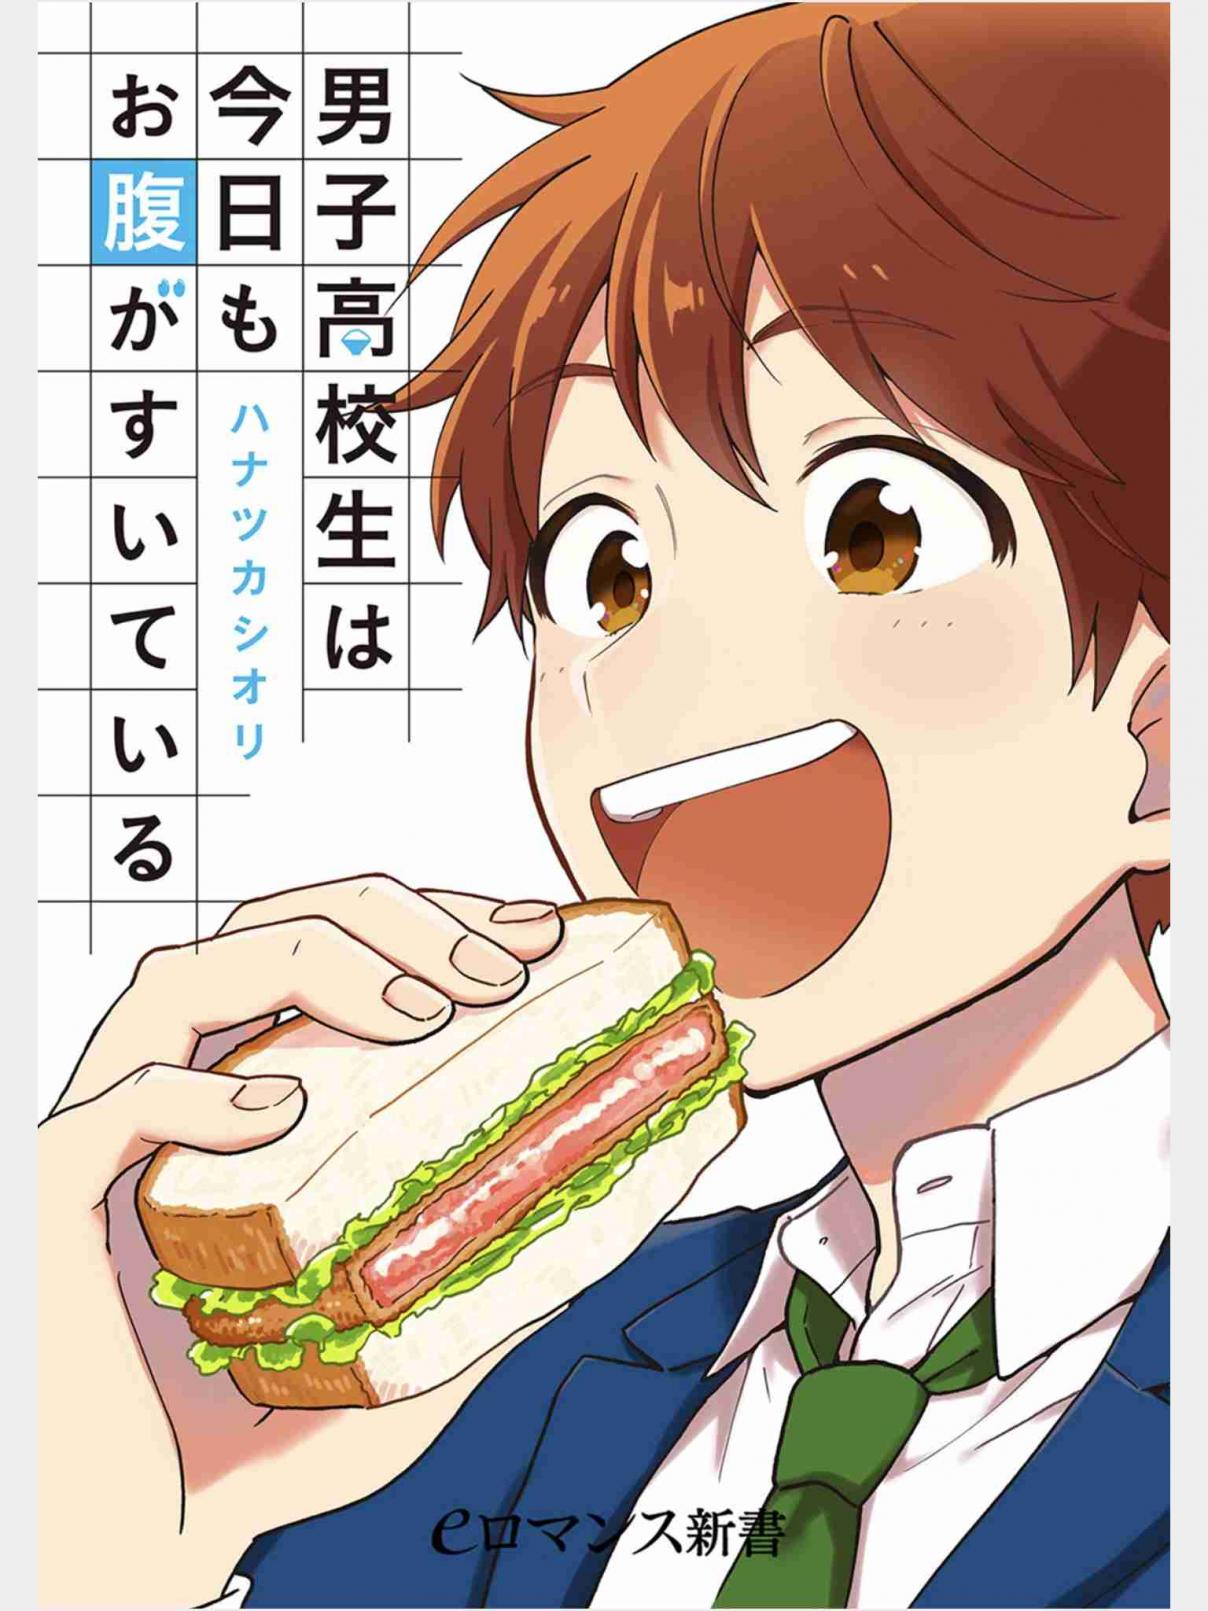 High School Boys Are Hungry Again Today Vol. 1 Ch. 1 Nagashi Soumen